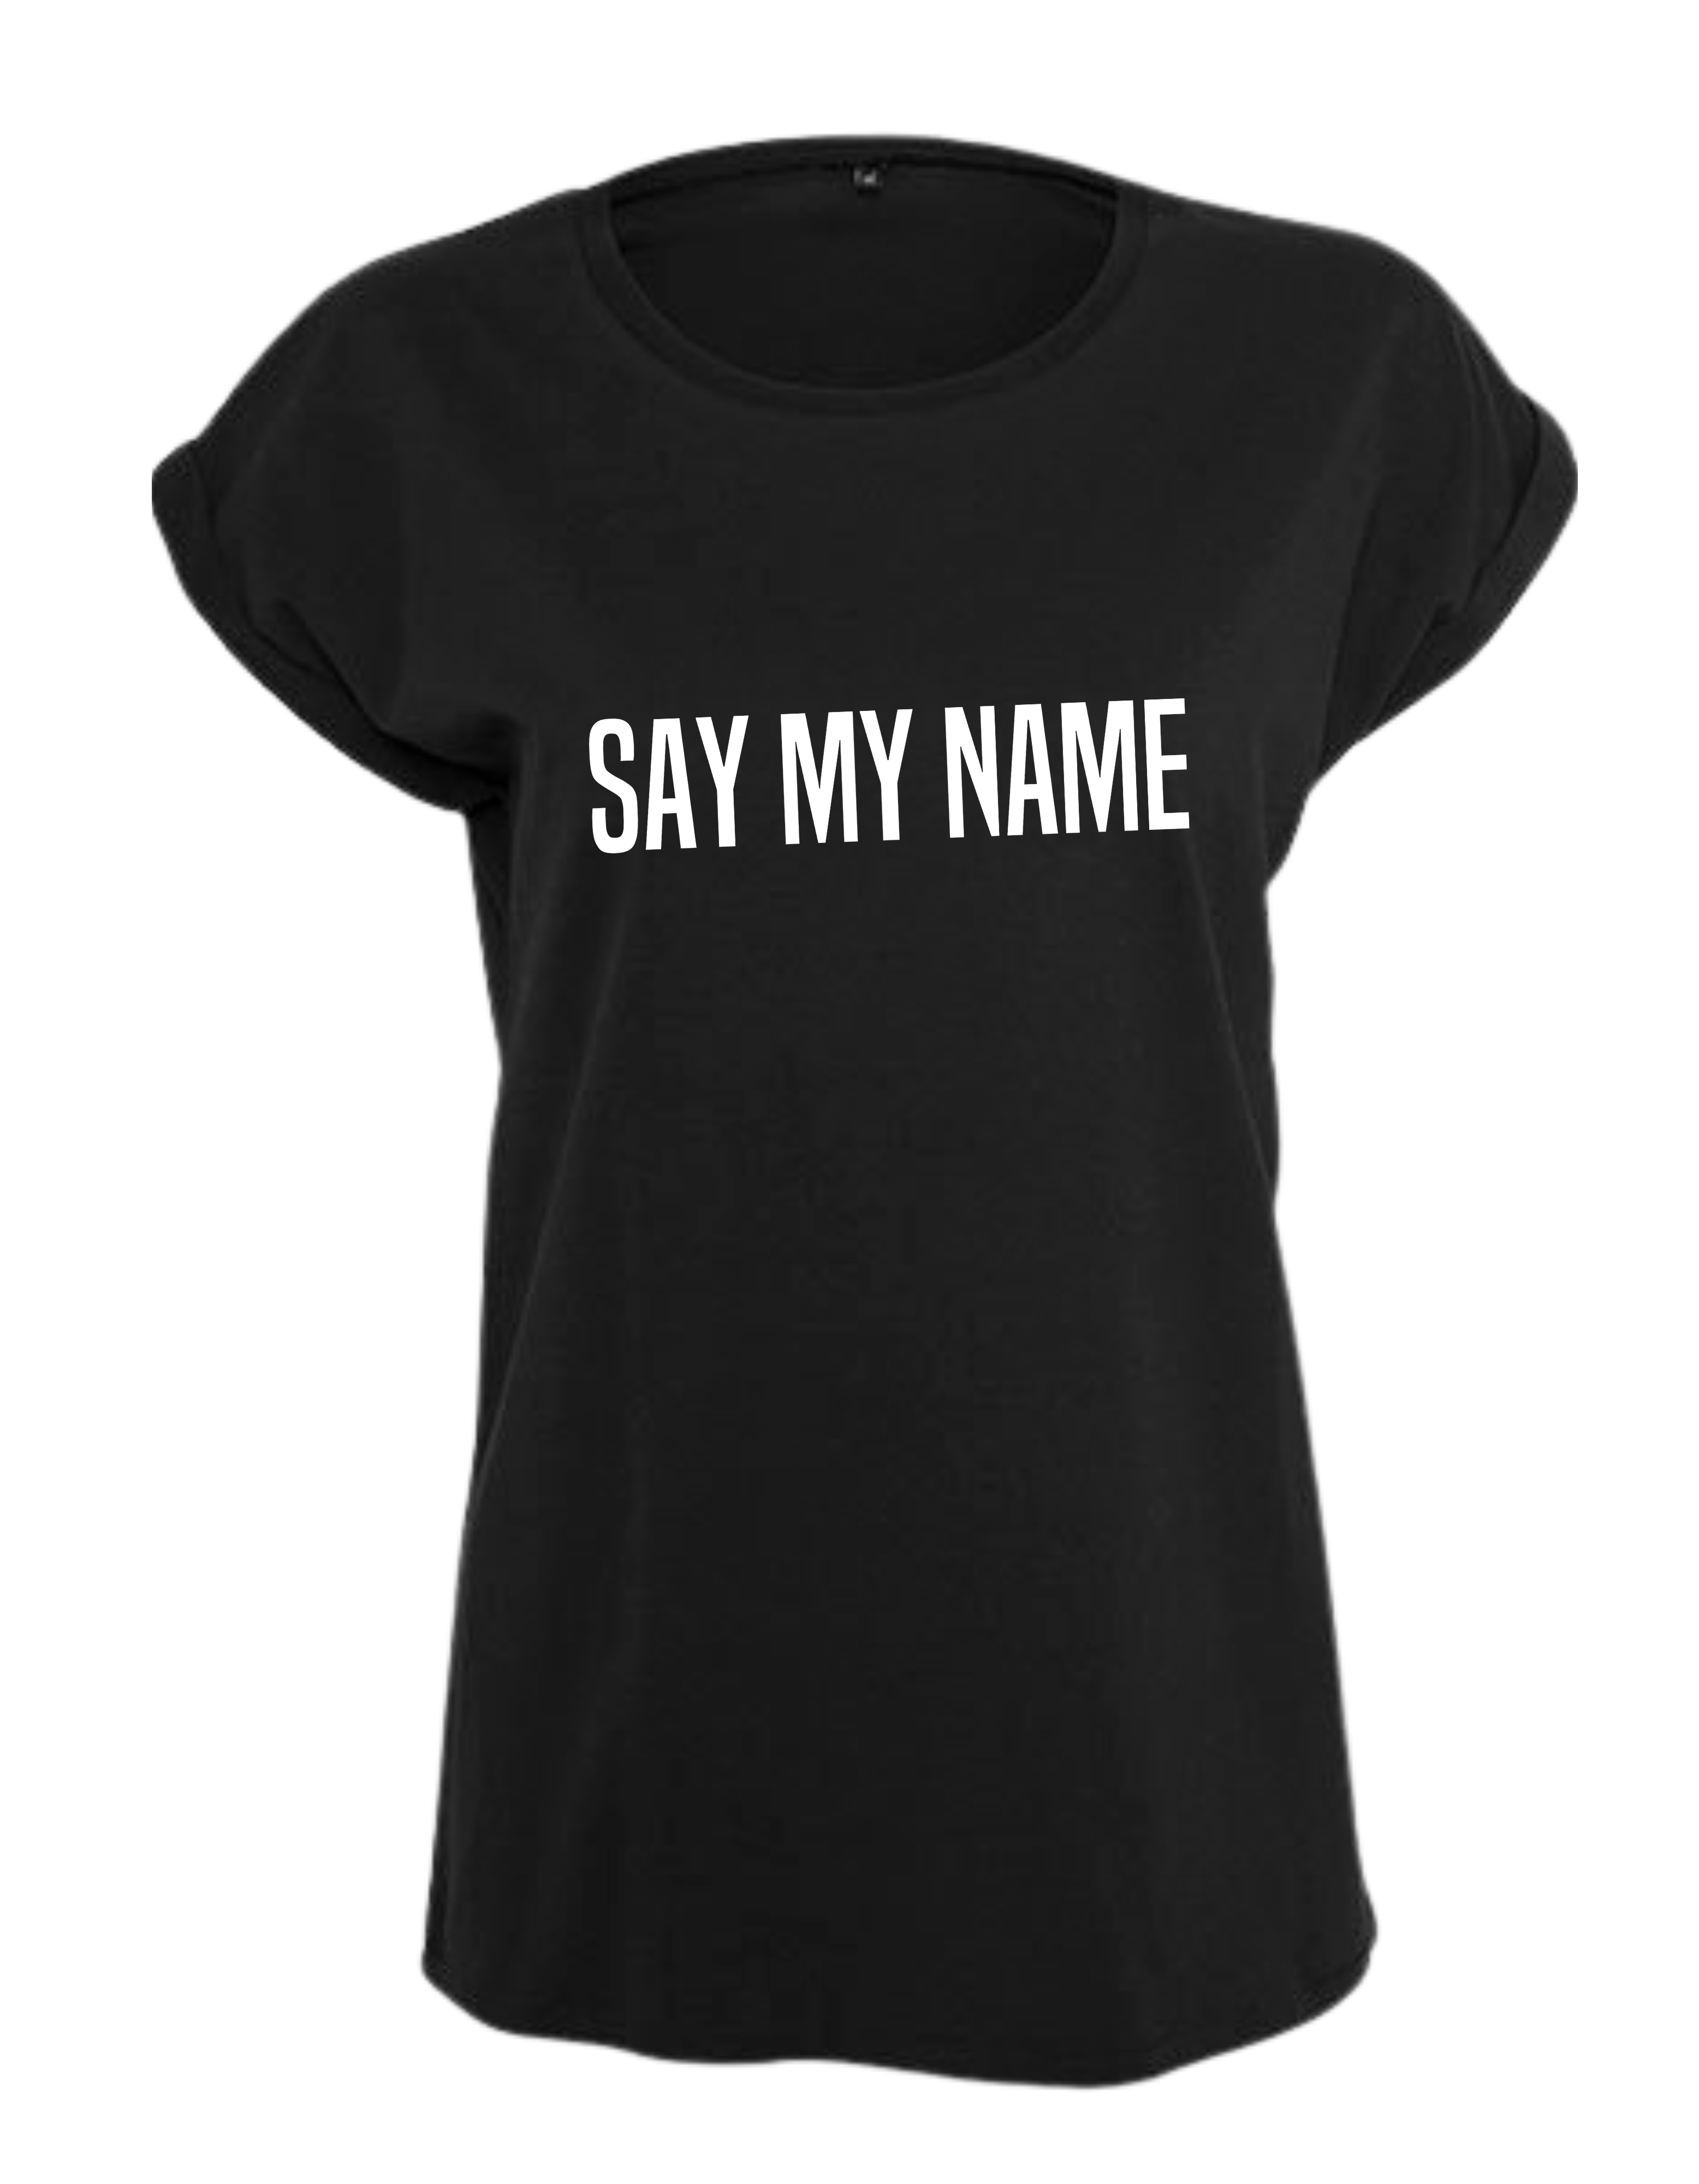 CSG Women's T-SHIRT "SAY MY NAME "